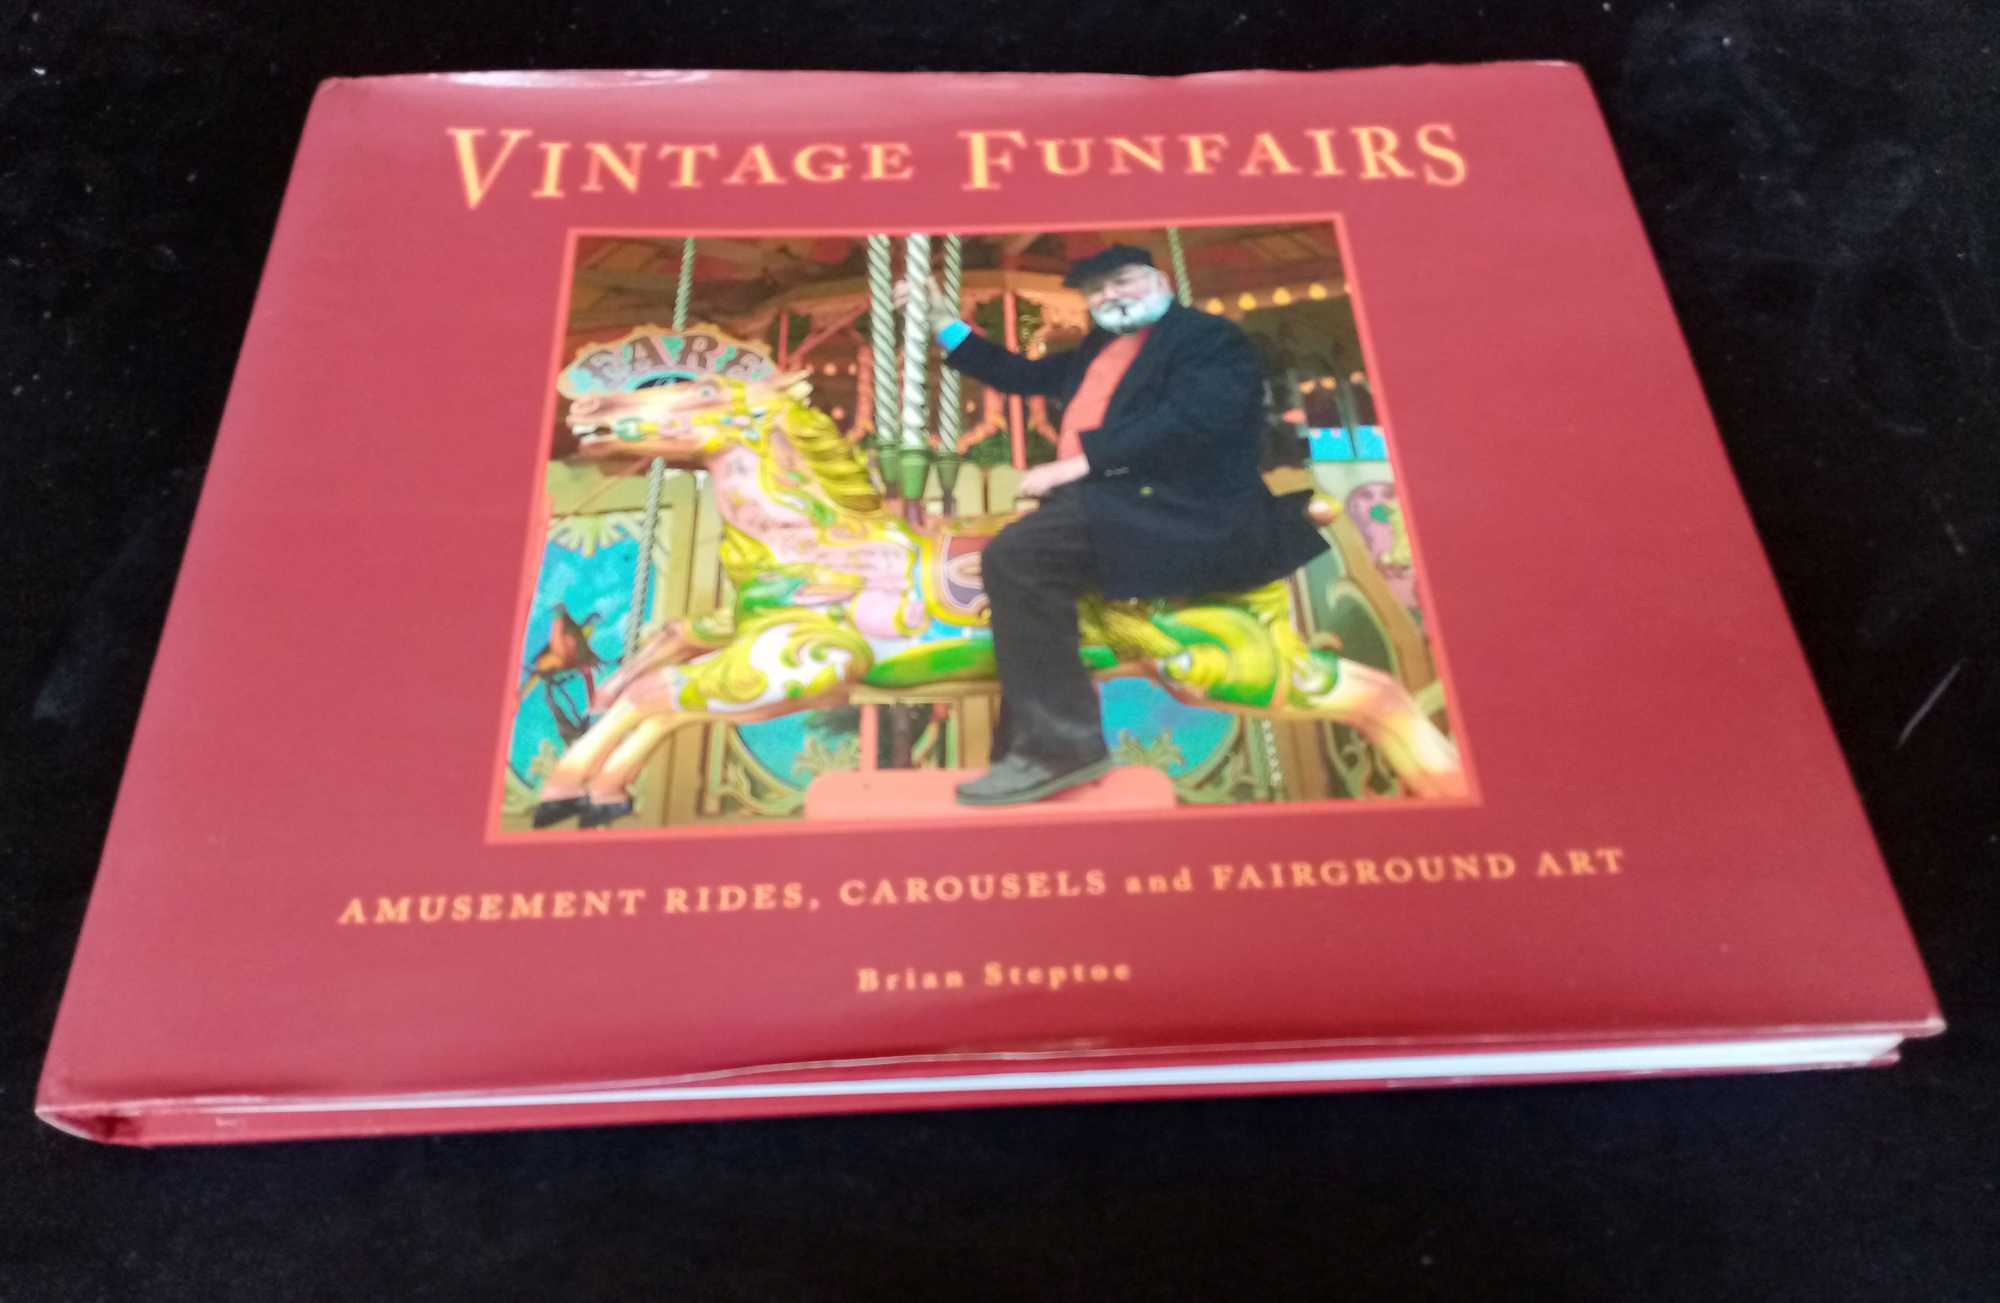 Brian Steptoe - Vintage Funfairs: Amusement Rides, Carousels and Fairground Art